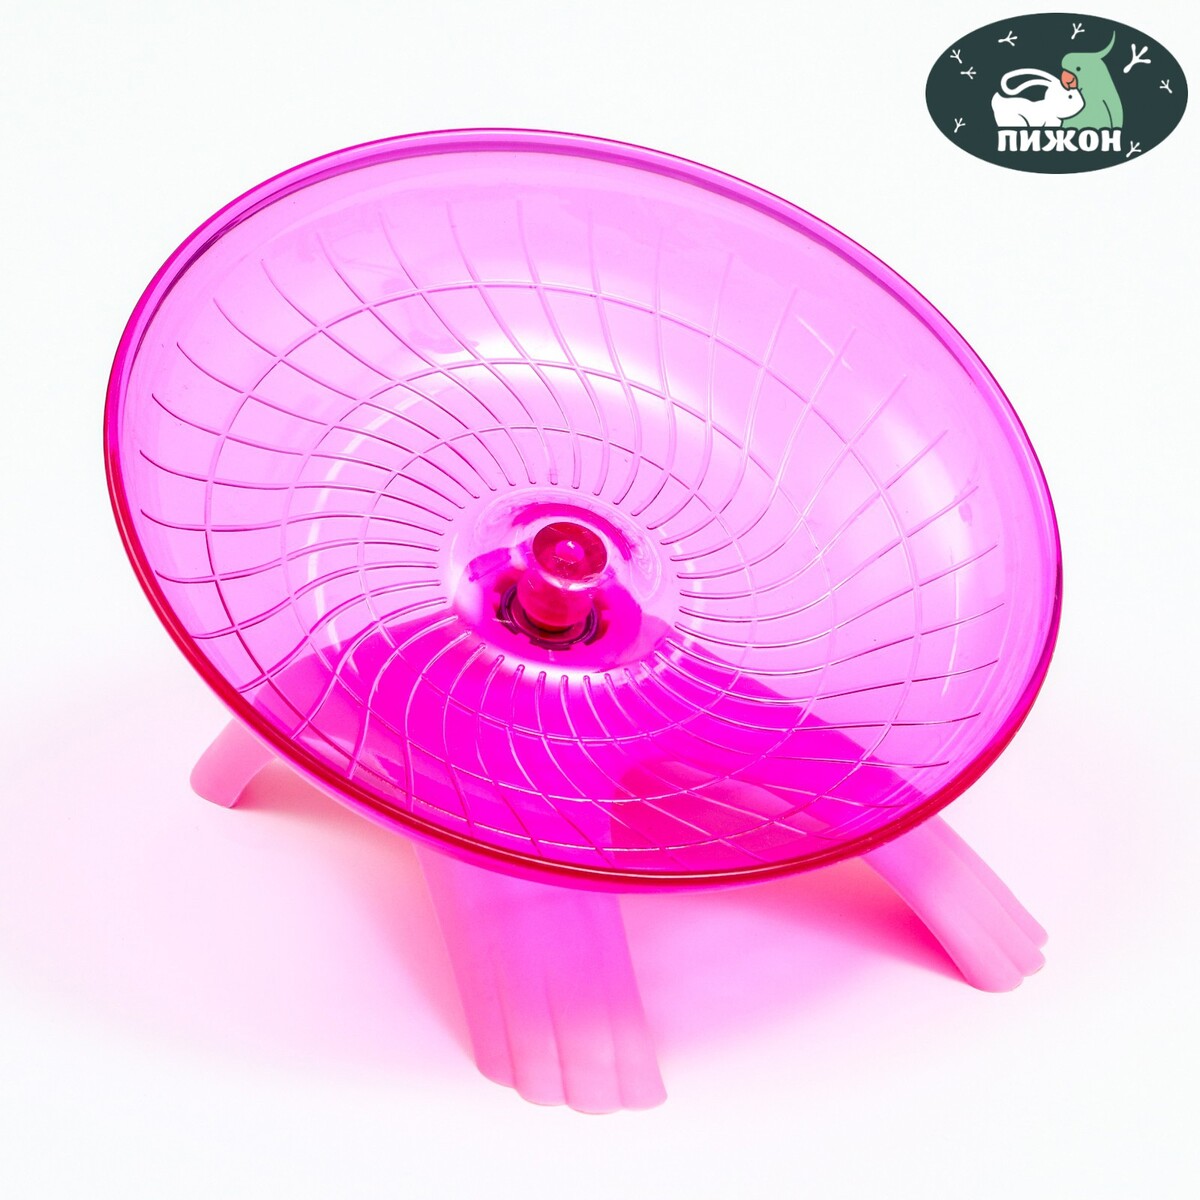 Беговая тарелка carno для грызунов, 18 х 18 х 11 см, розовая беговая дорожка домашняя oxygen fitness runup groove a